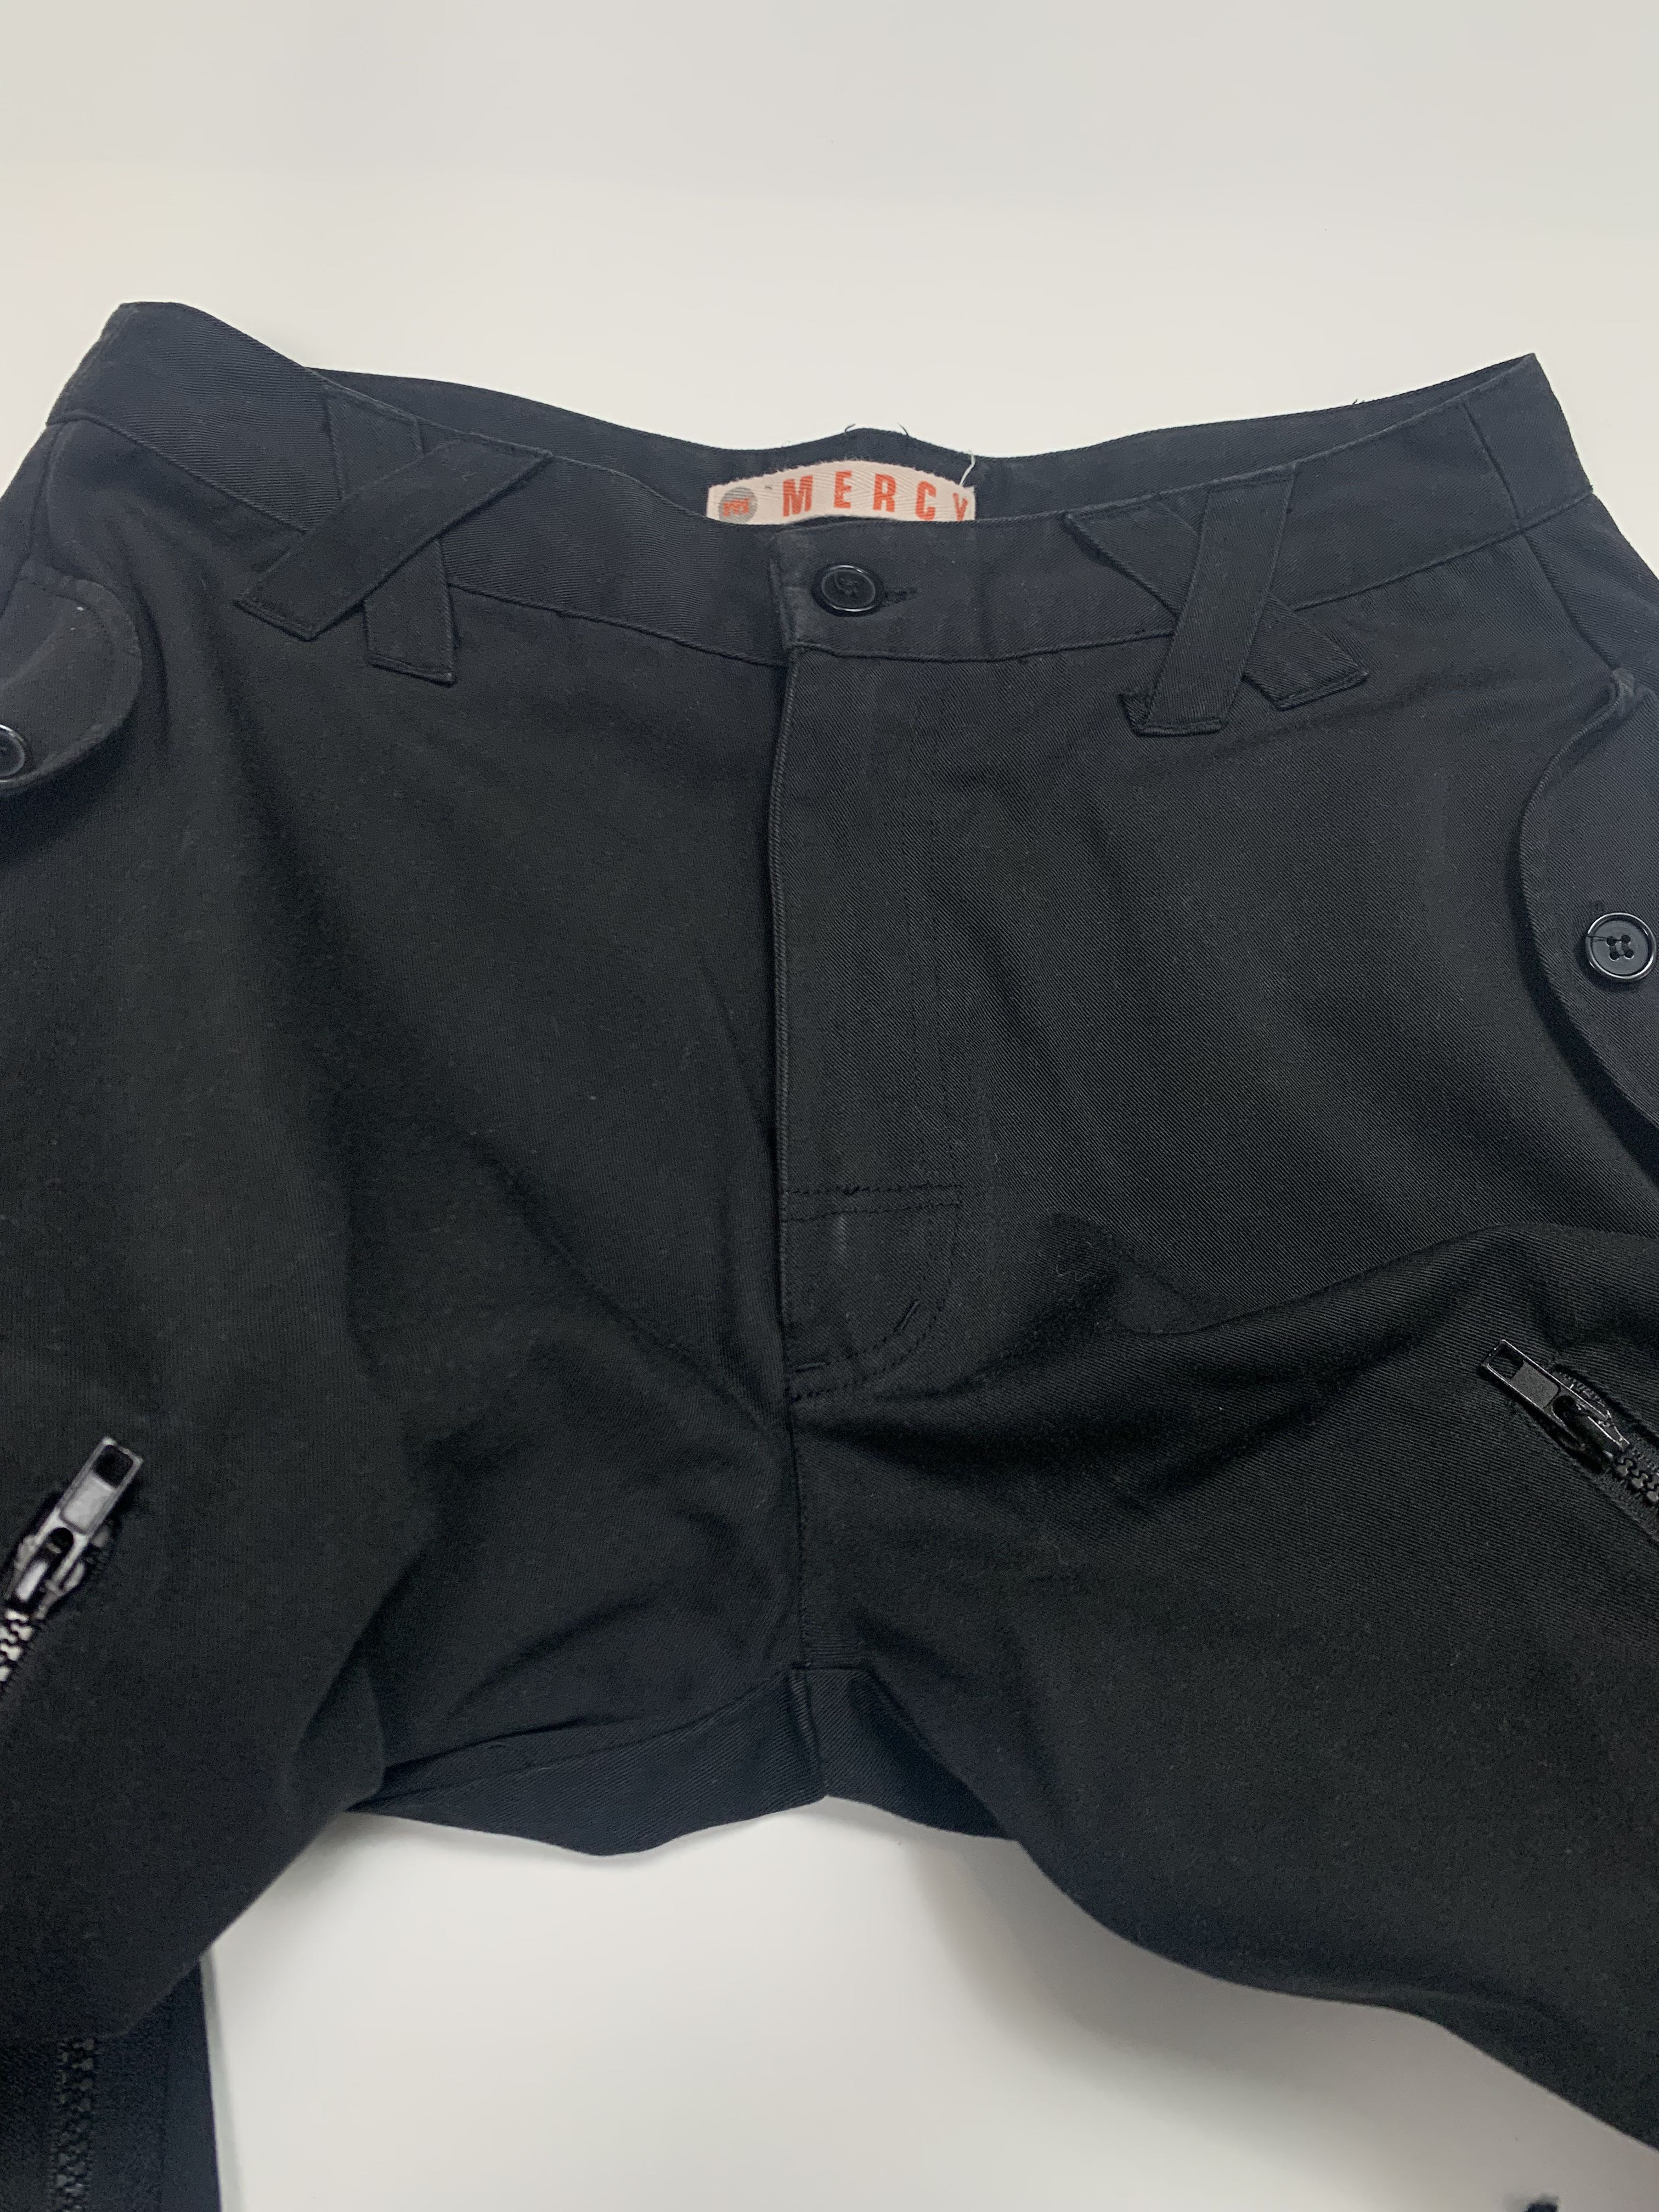 Vintage Mercy Men Pants Women Japanese Style Pants Techwear Lace Up Pants Size M Y2K Pants Hypebeast Pants Streetwear - 4